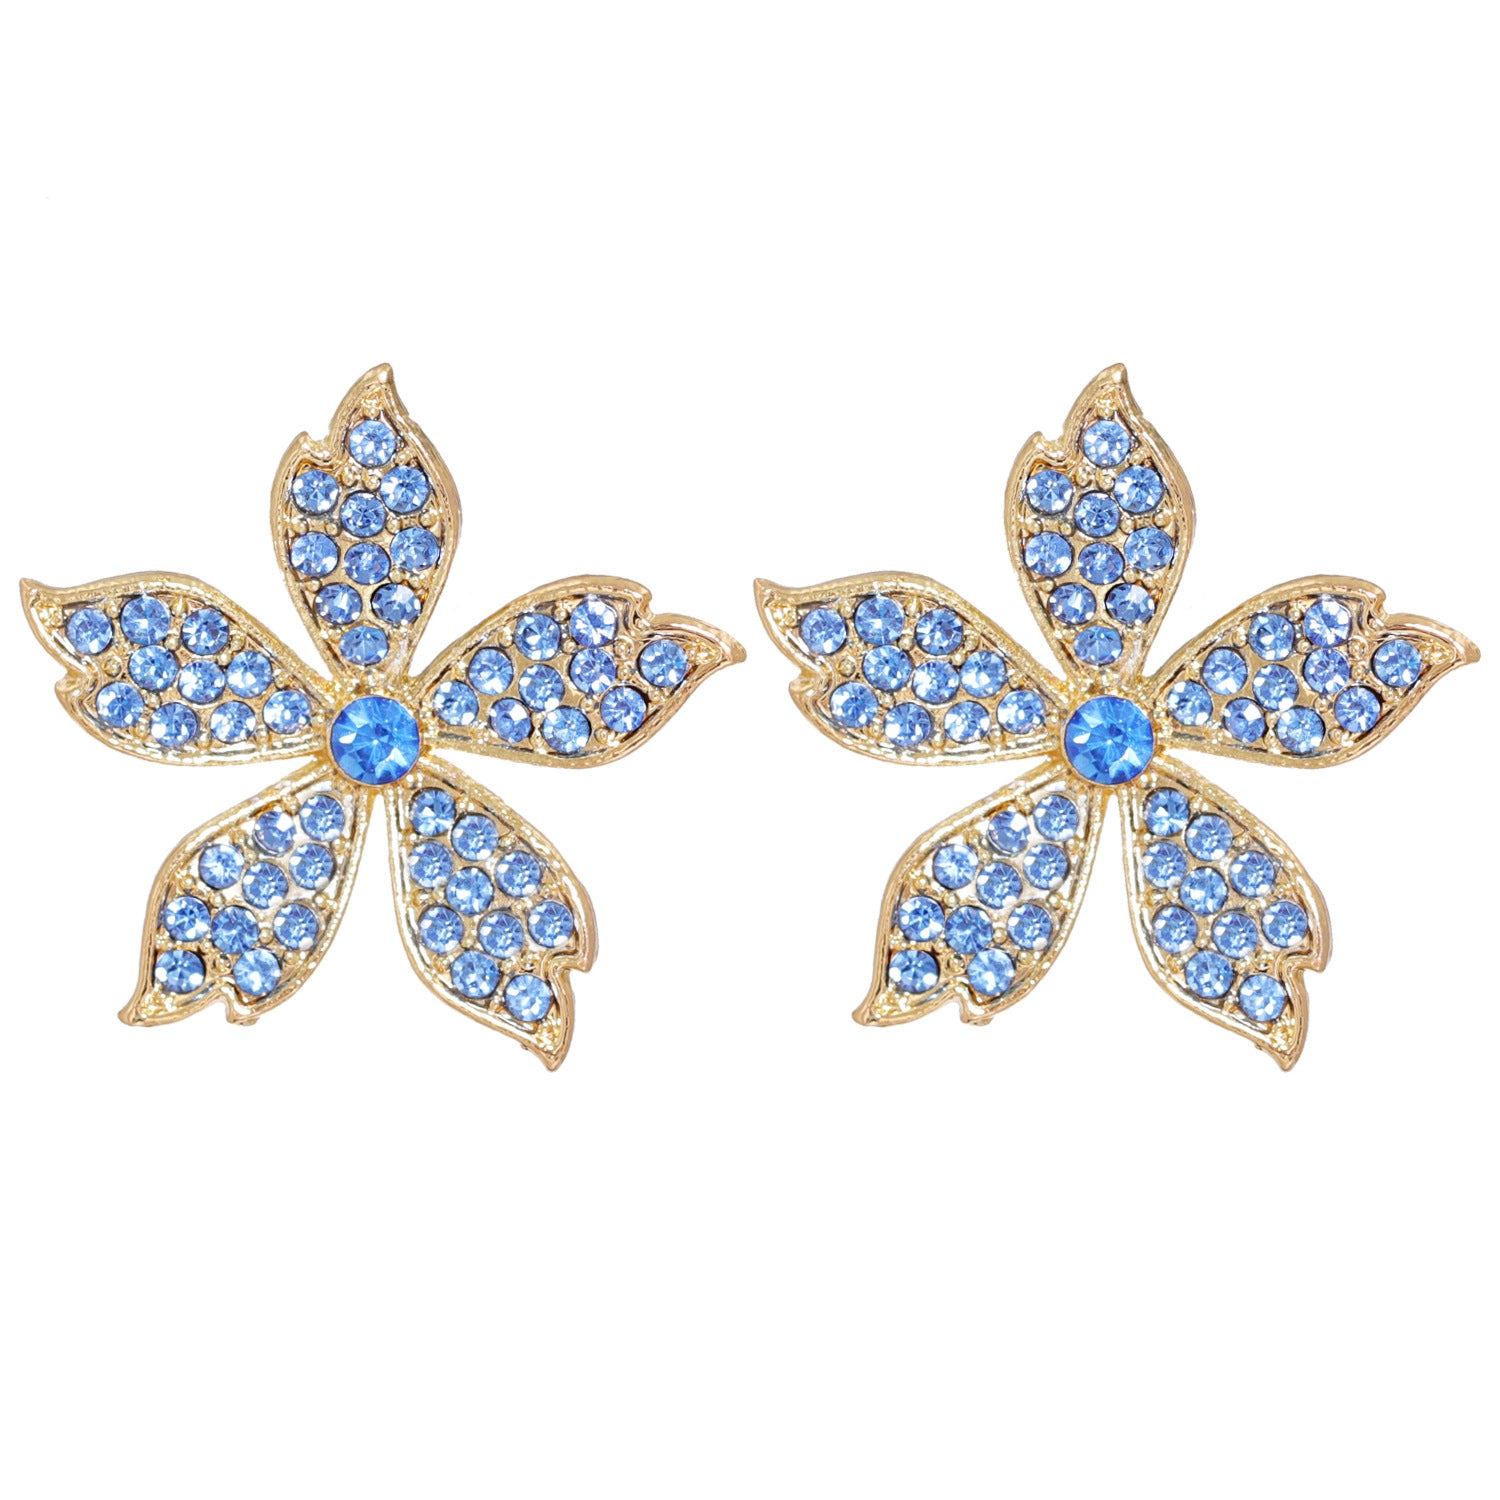 Blue Rhinestone Flower Post Earrings